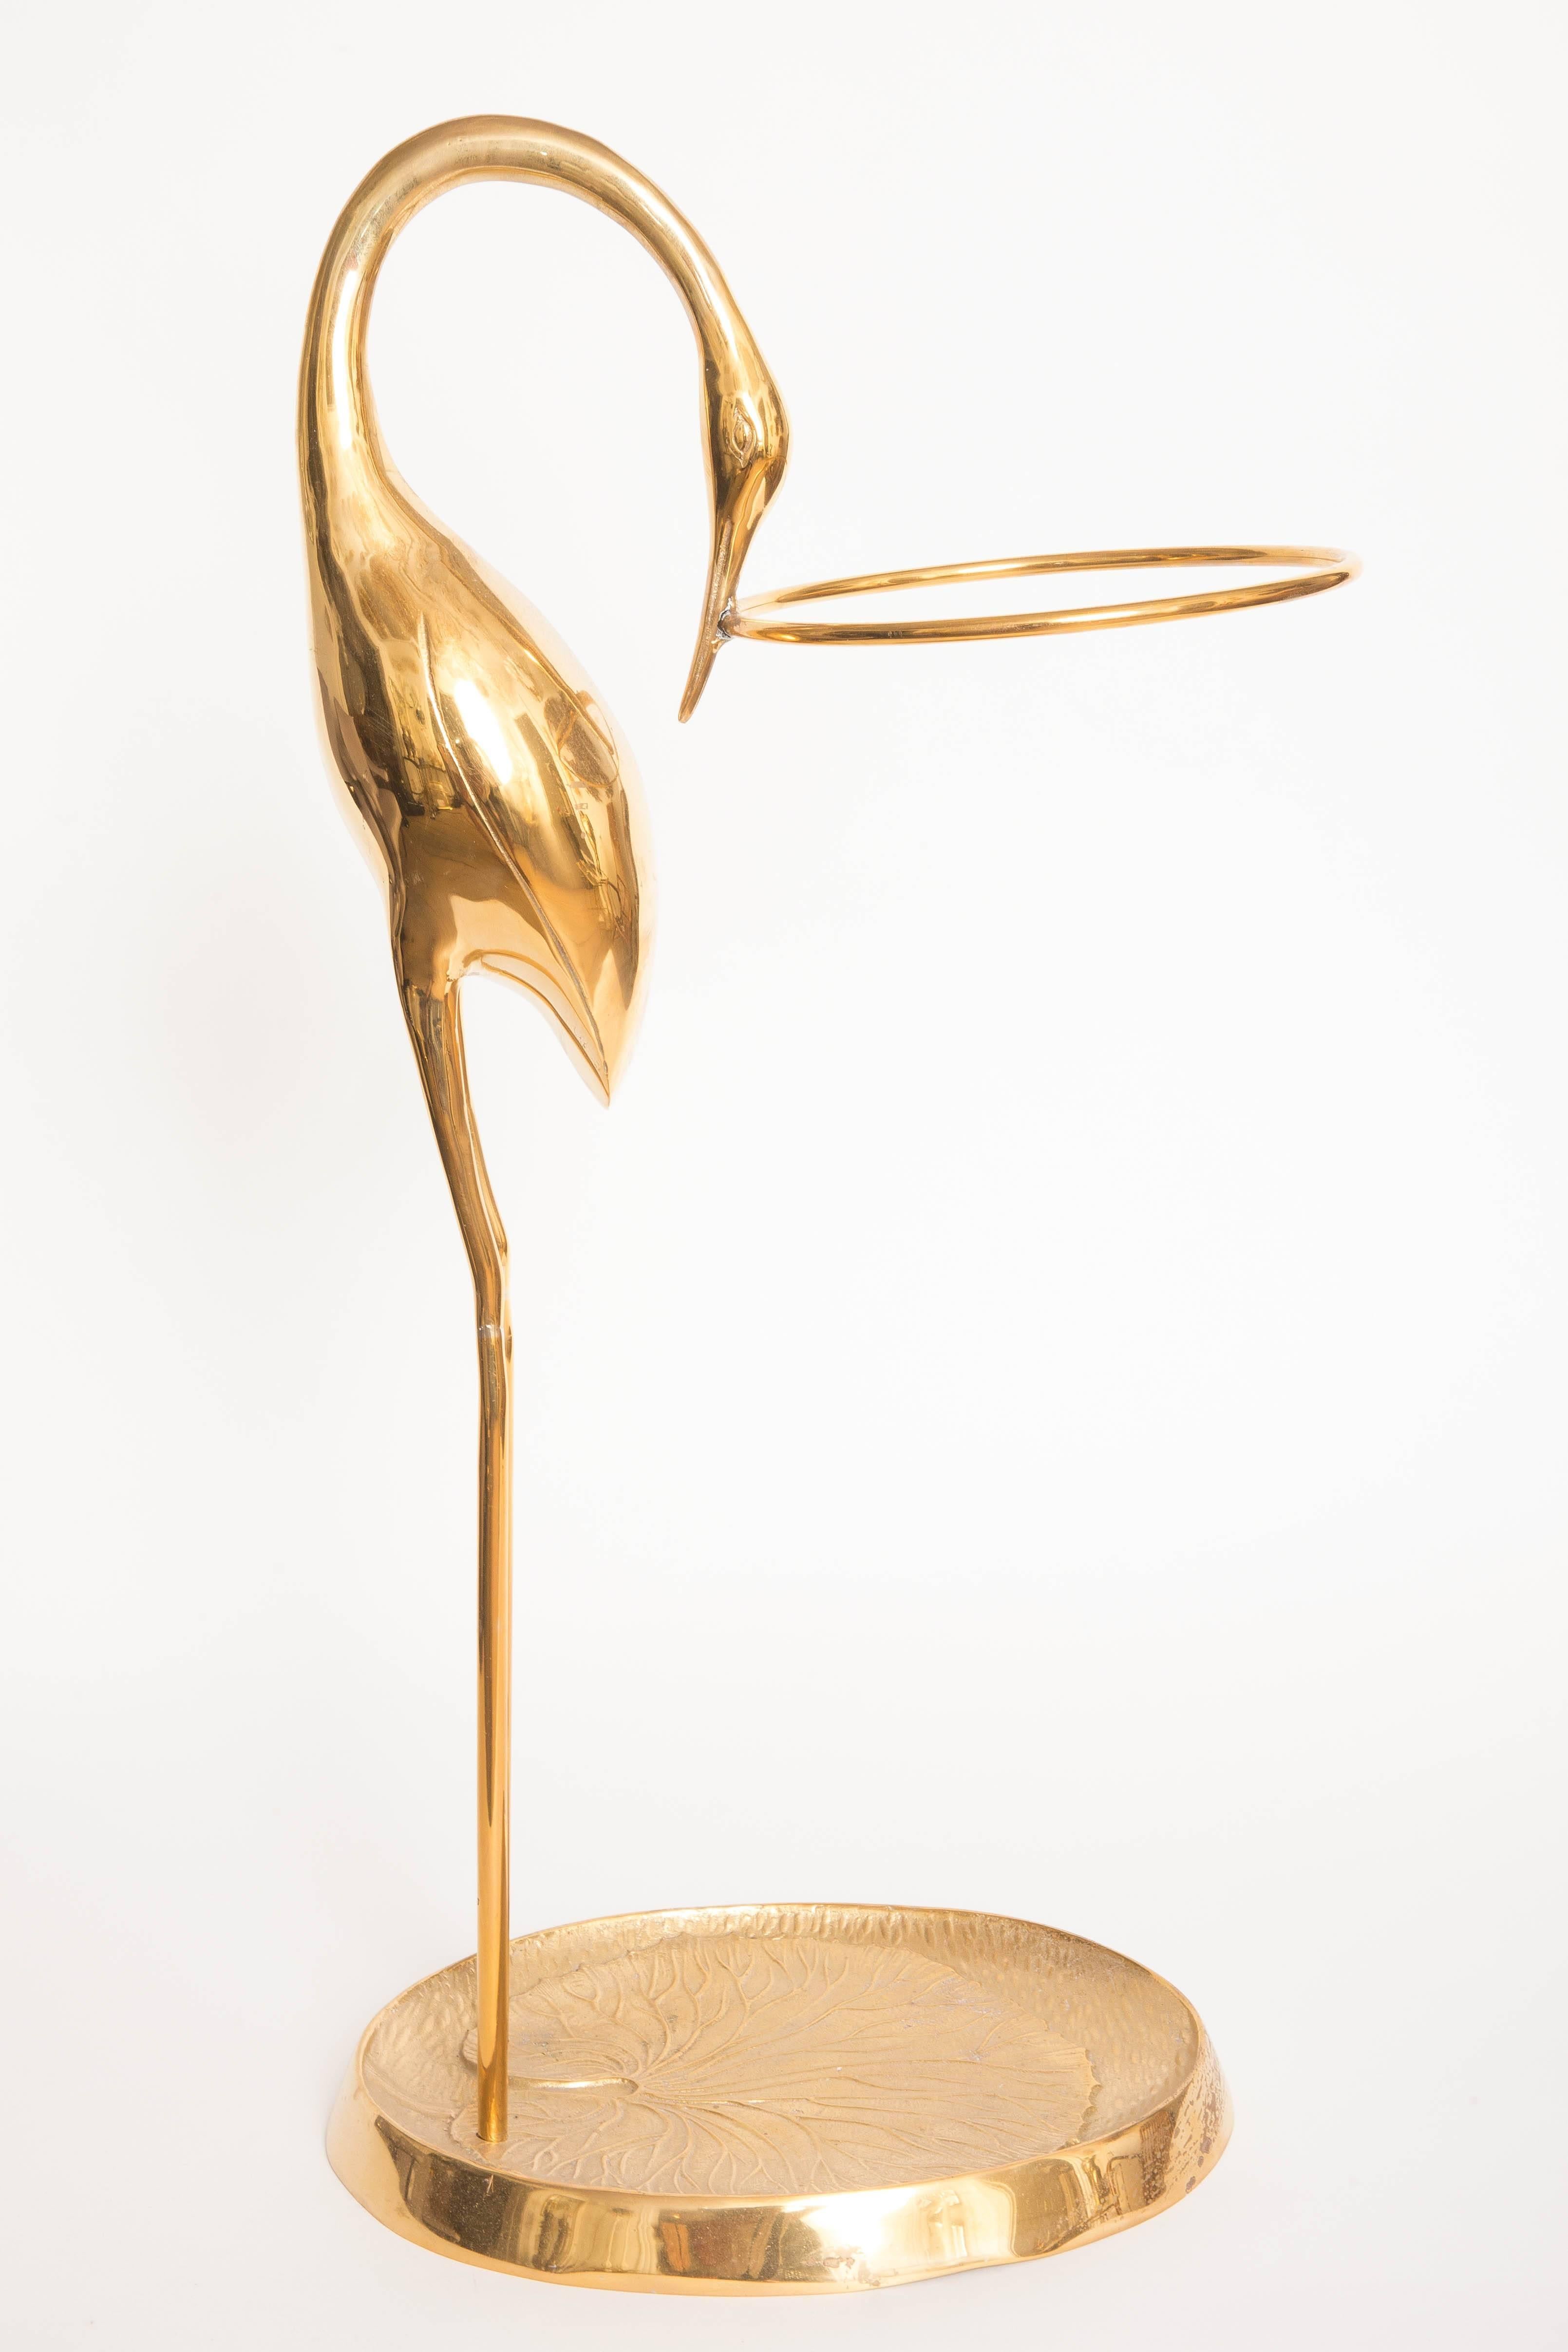 Brass Sculptured Heron Form Umbrella Stand 1